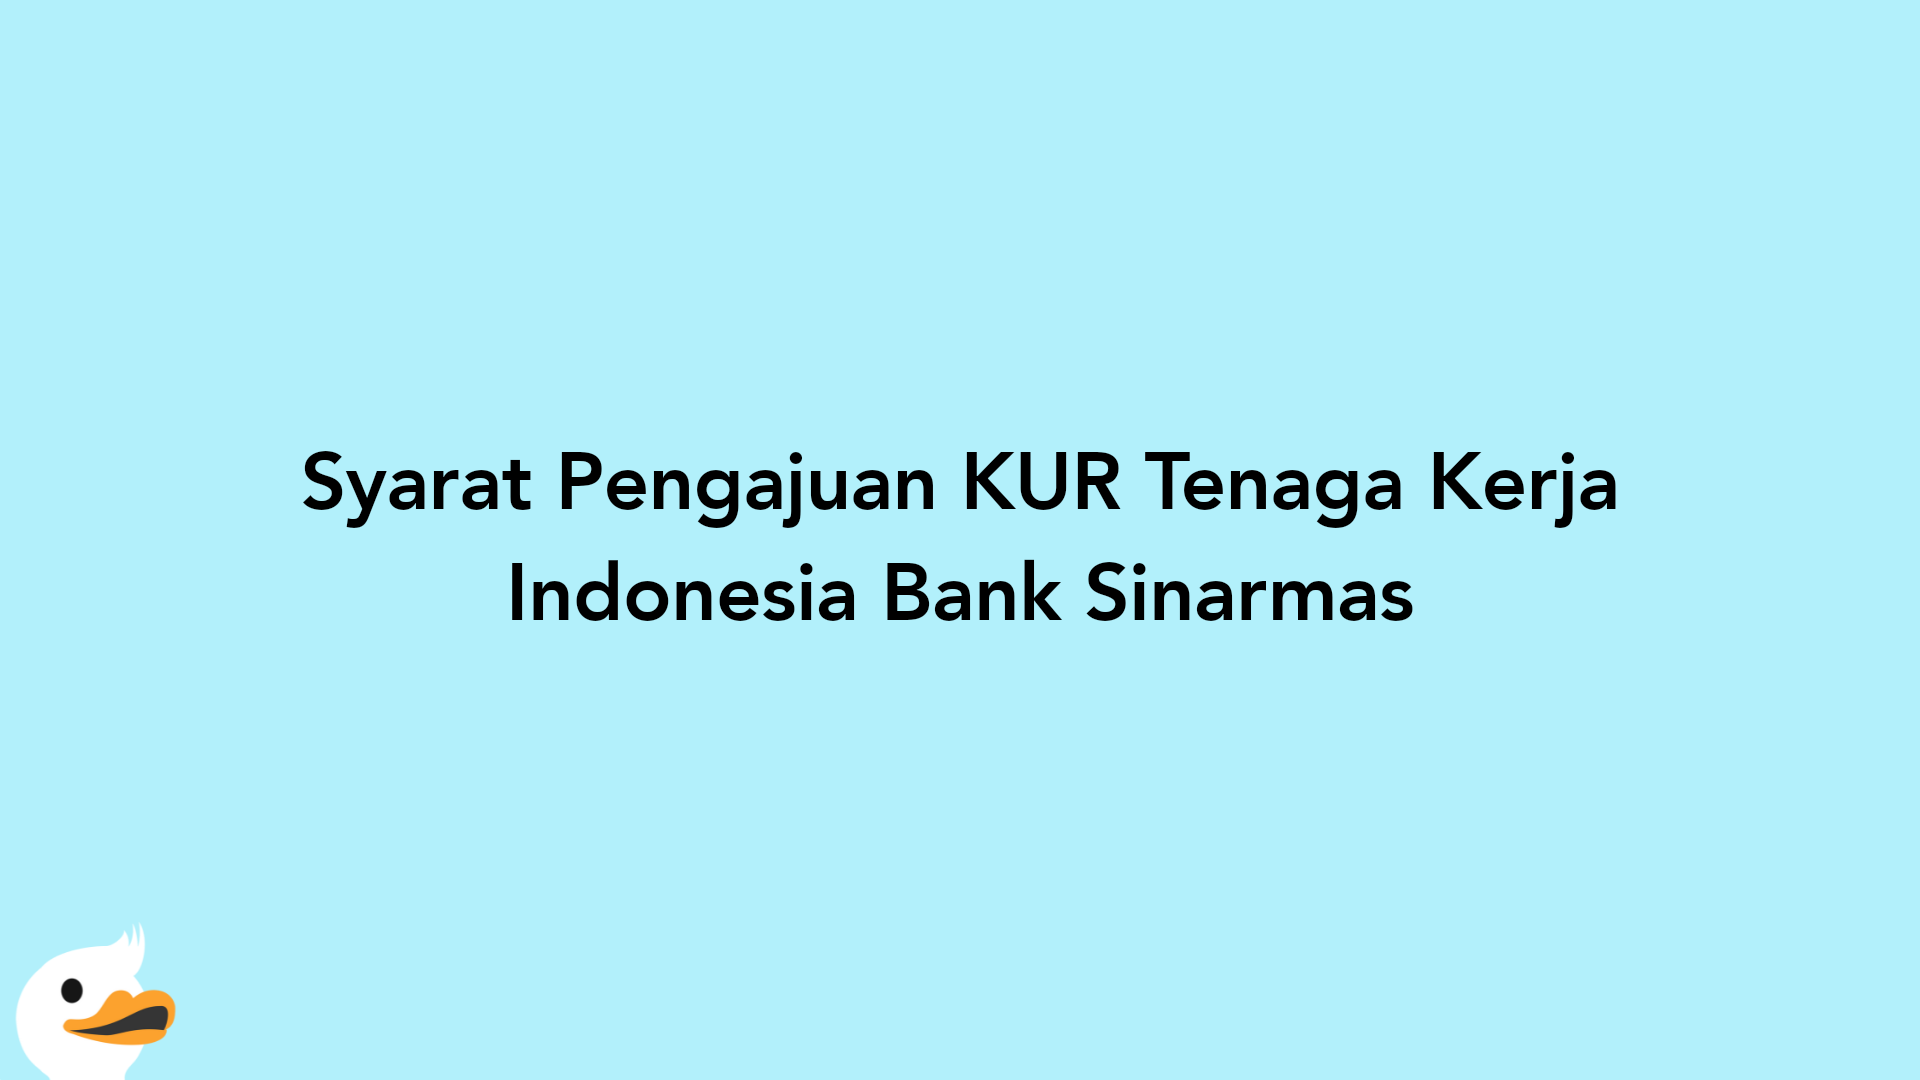 Syarat Pengajuan KUR Tenaga Kerja Indonesia Bank Sinarmas